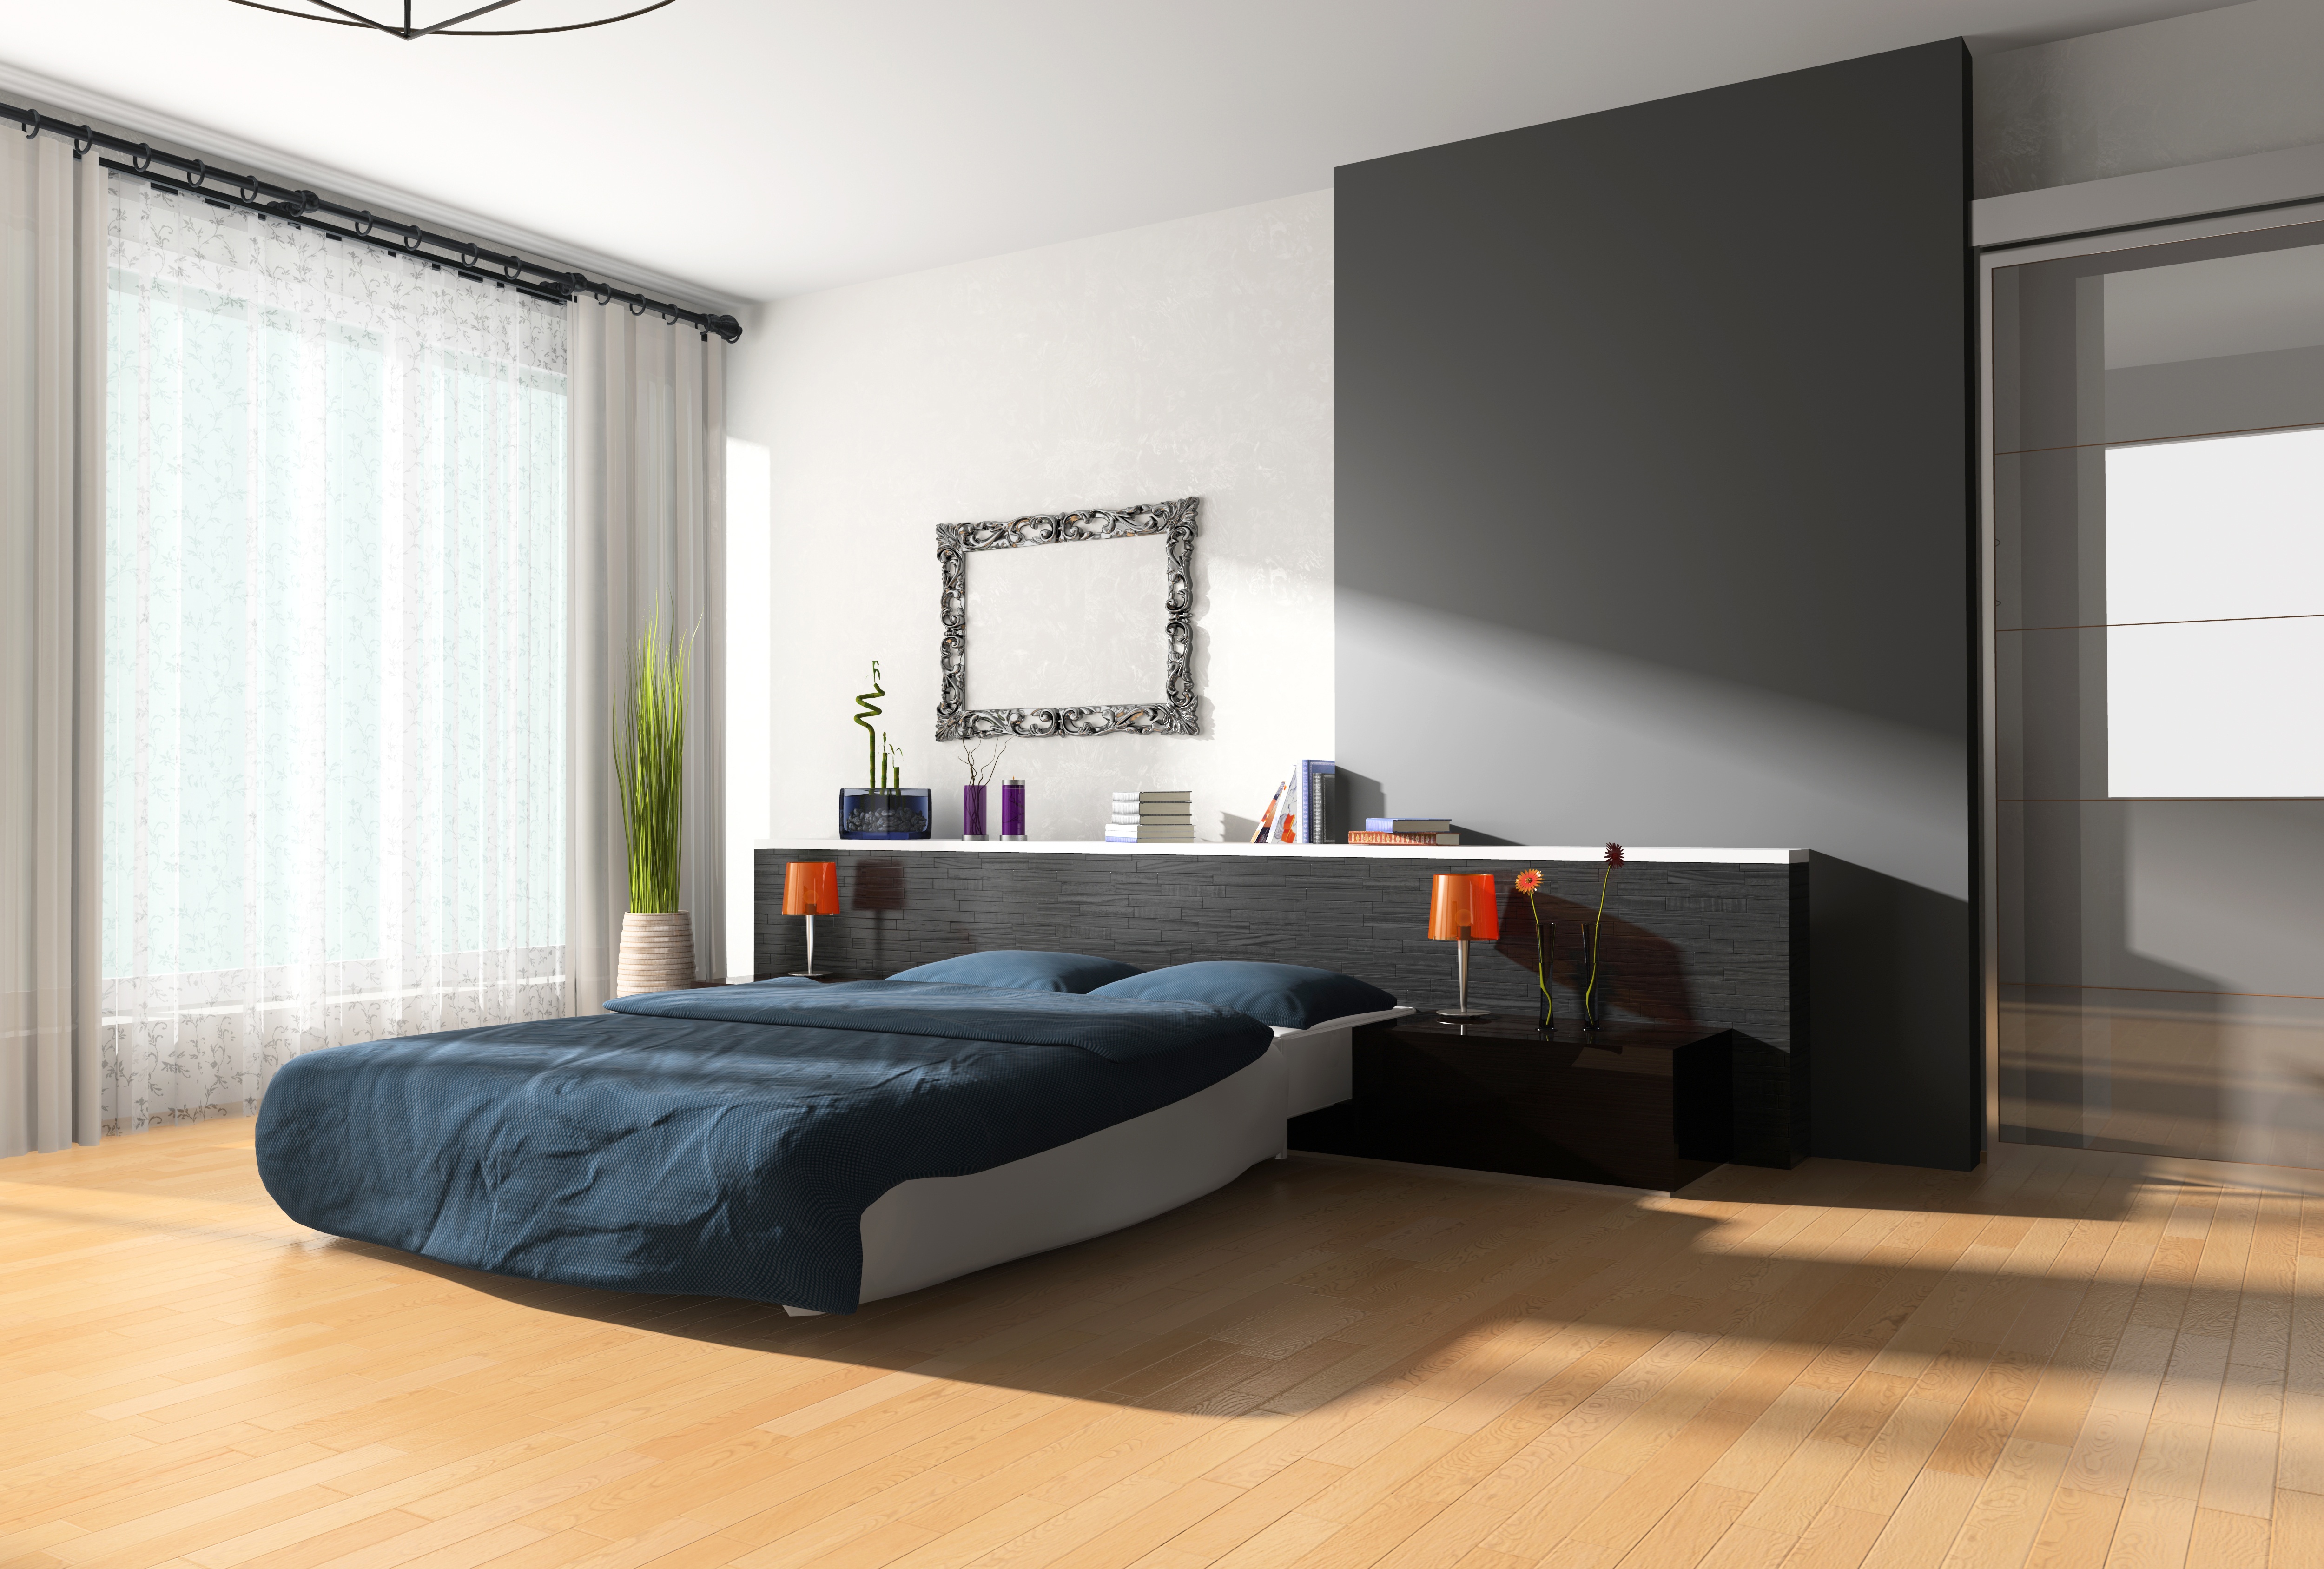 Bed Bedroom Cgi Furniture Room 5000x3375